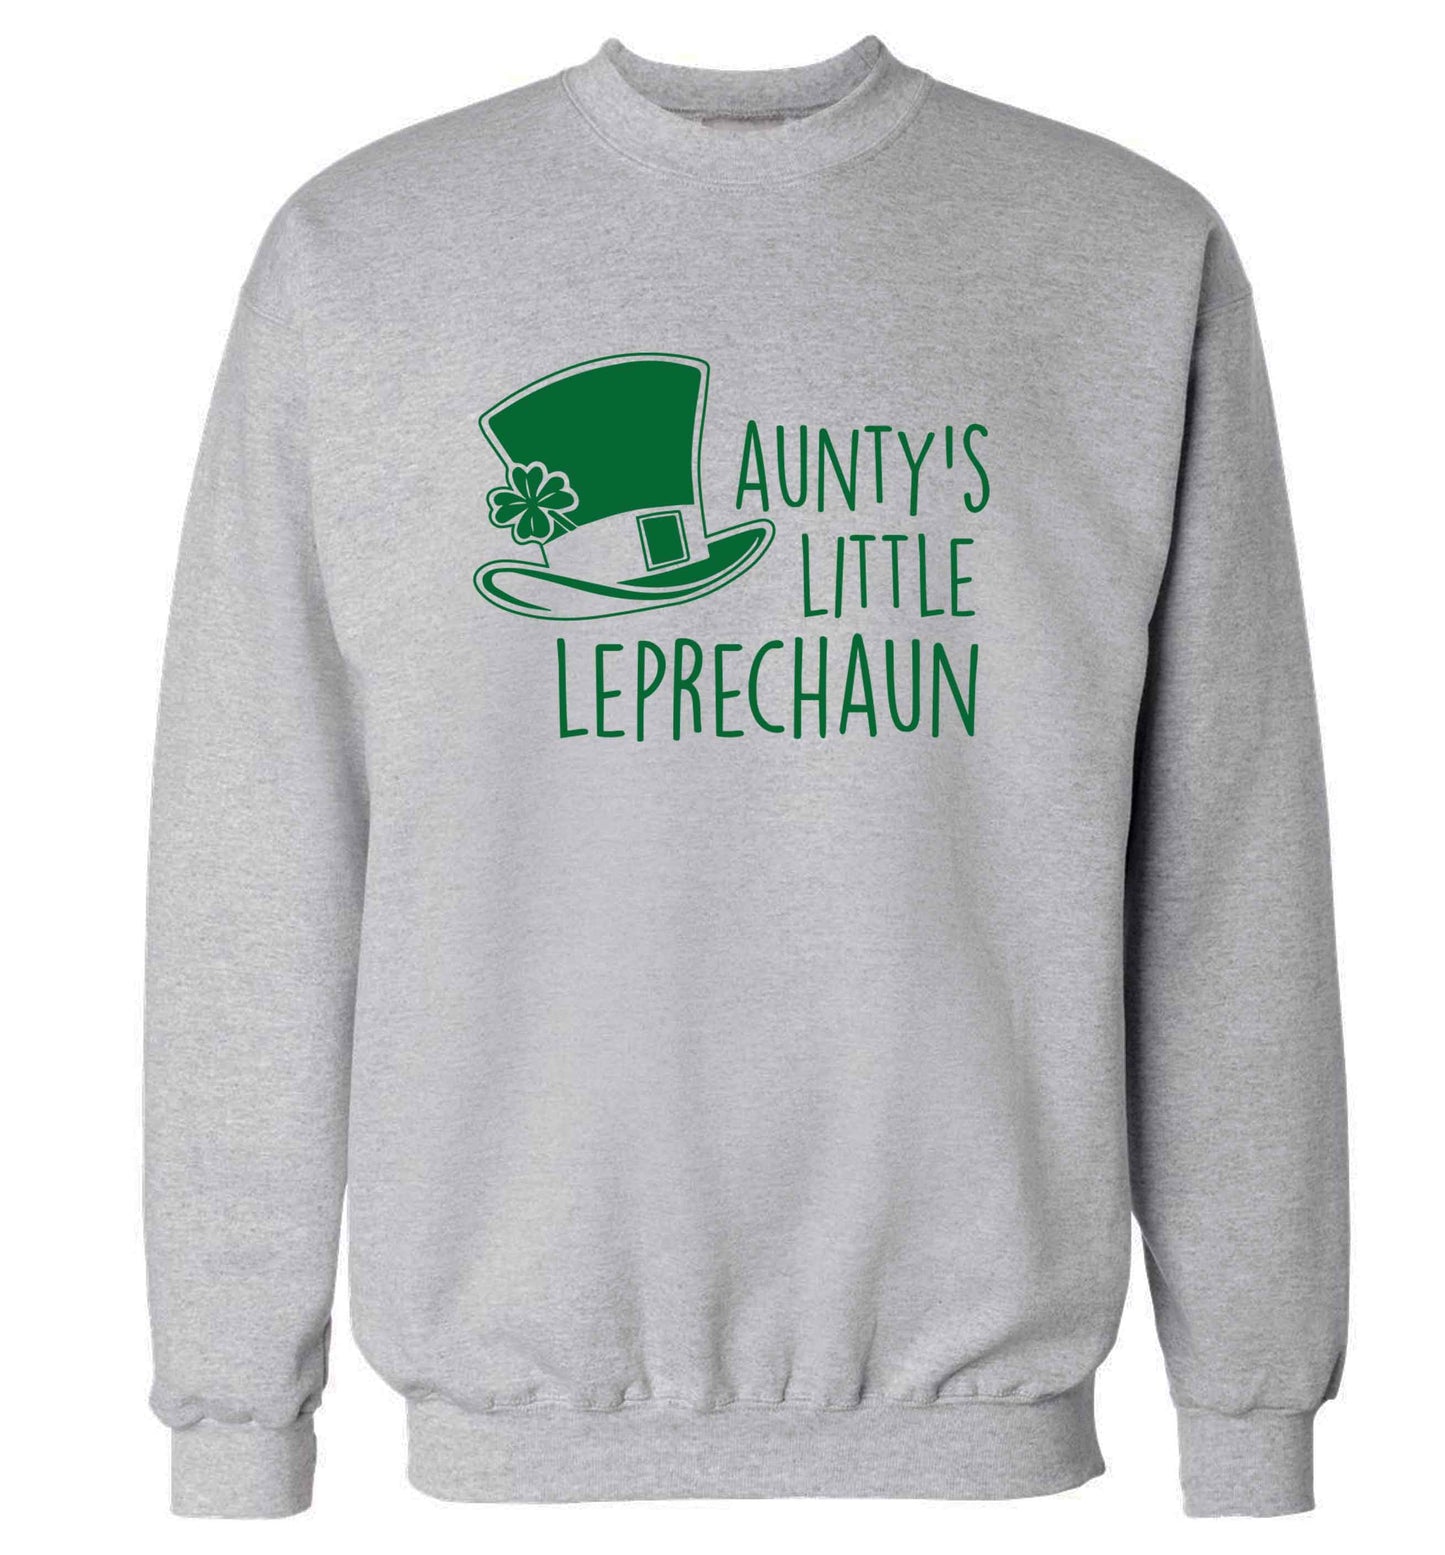 Aunty's little leprechaun adult's unisex grey sweater 2XL